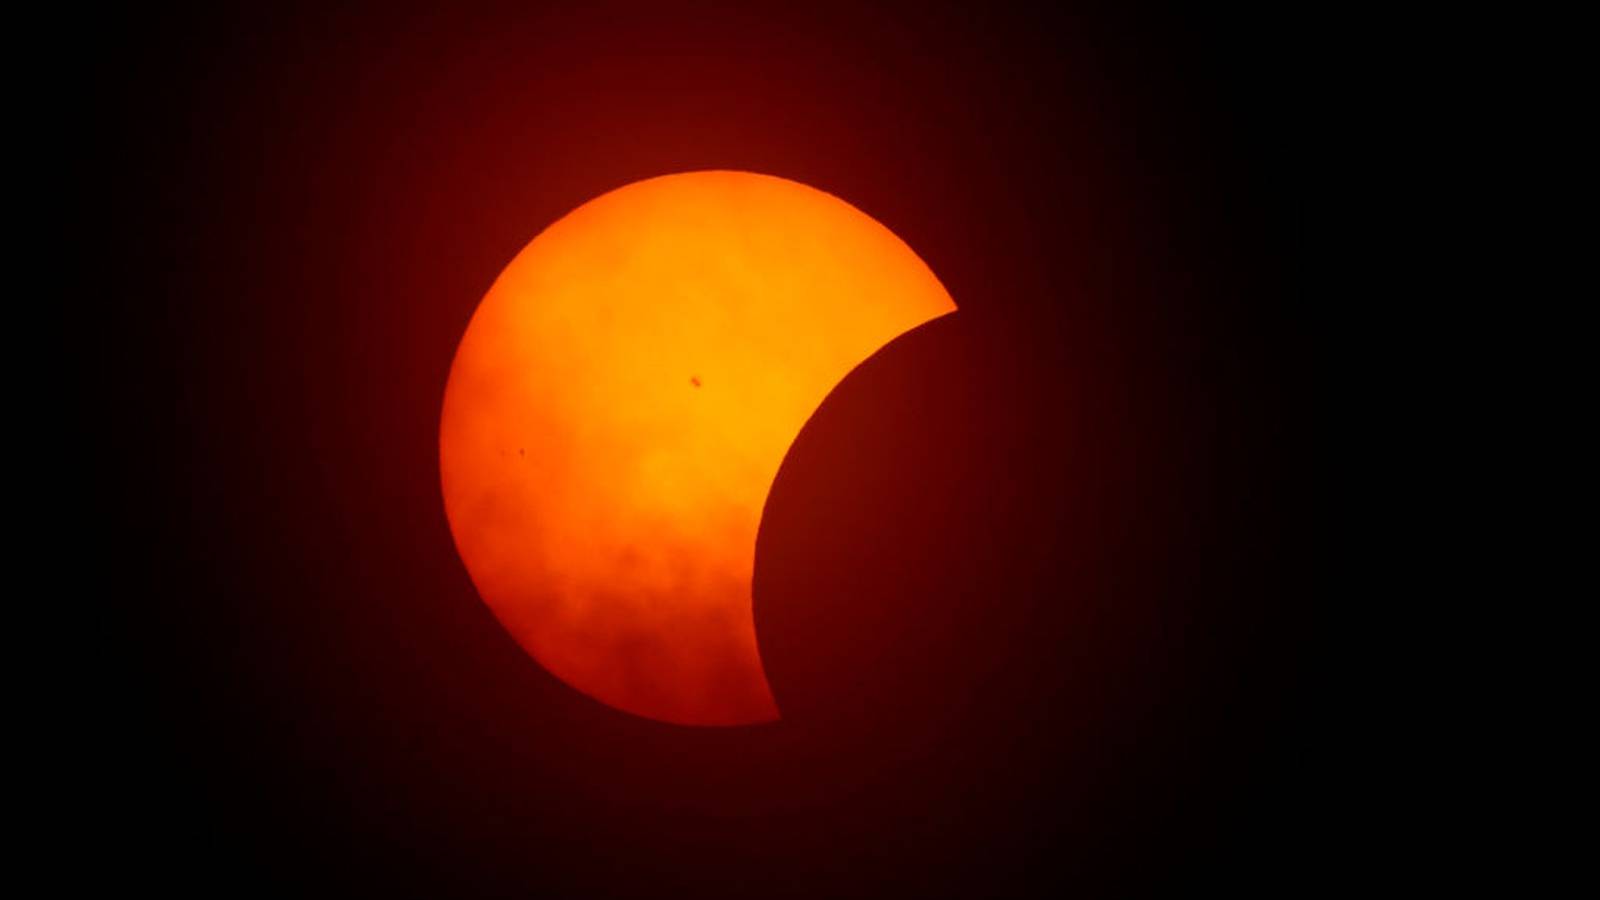 Solar eclipse 2024 Social media has fun with sky show Your